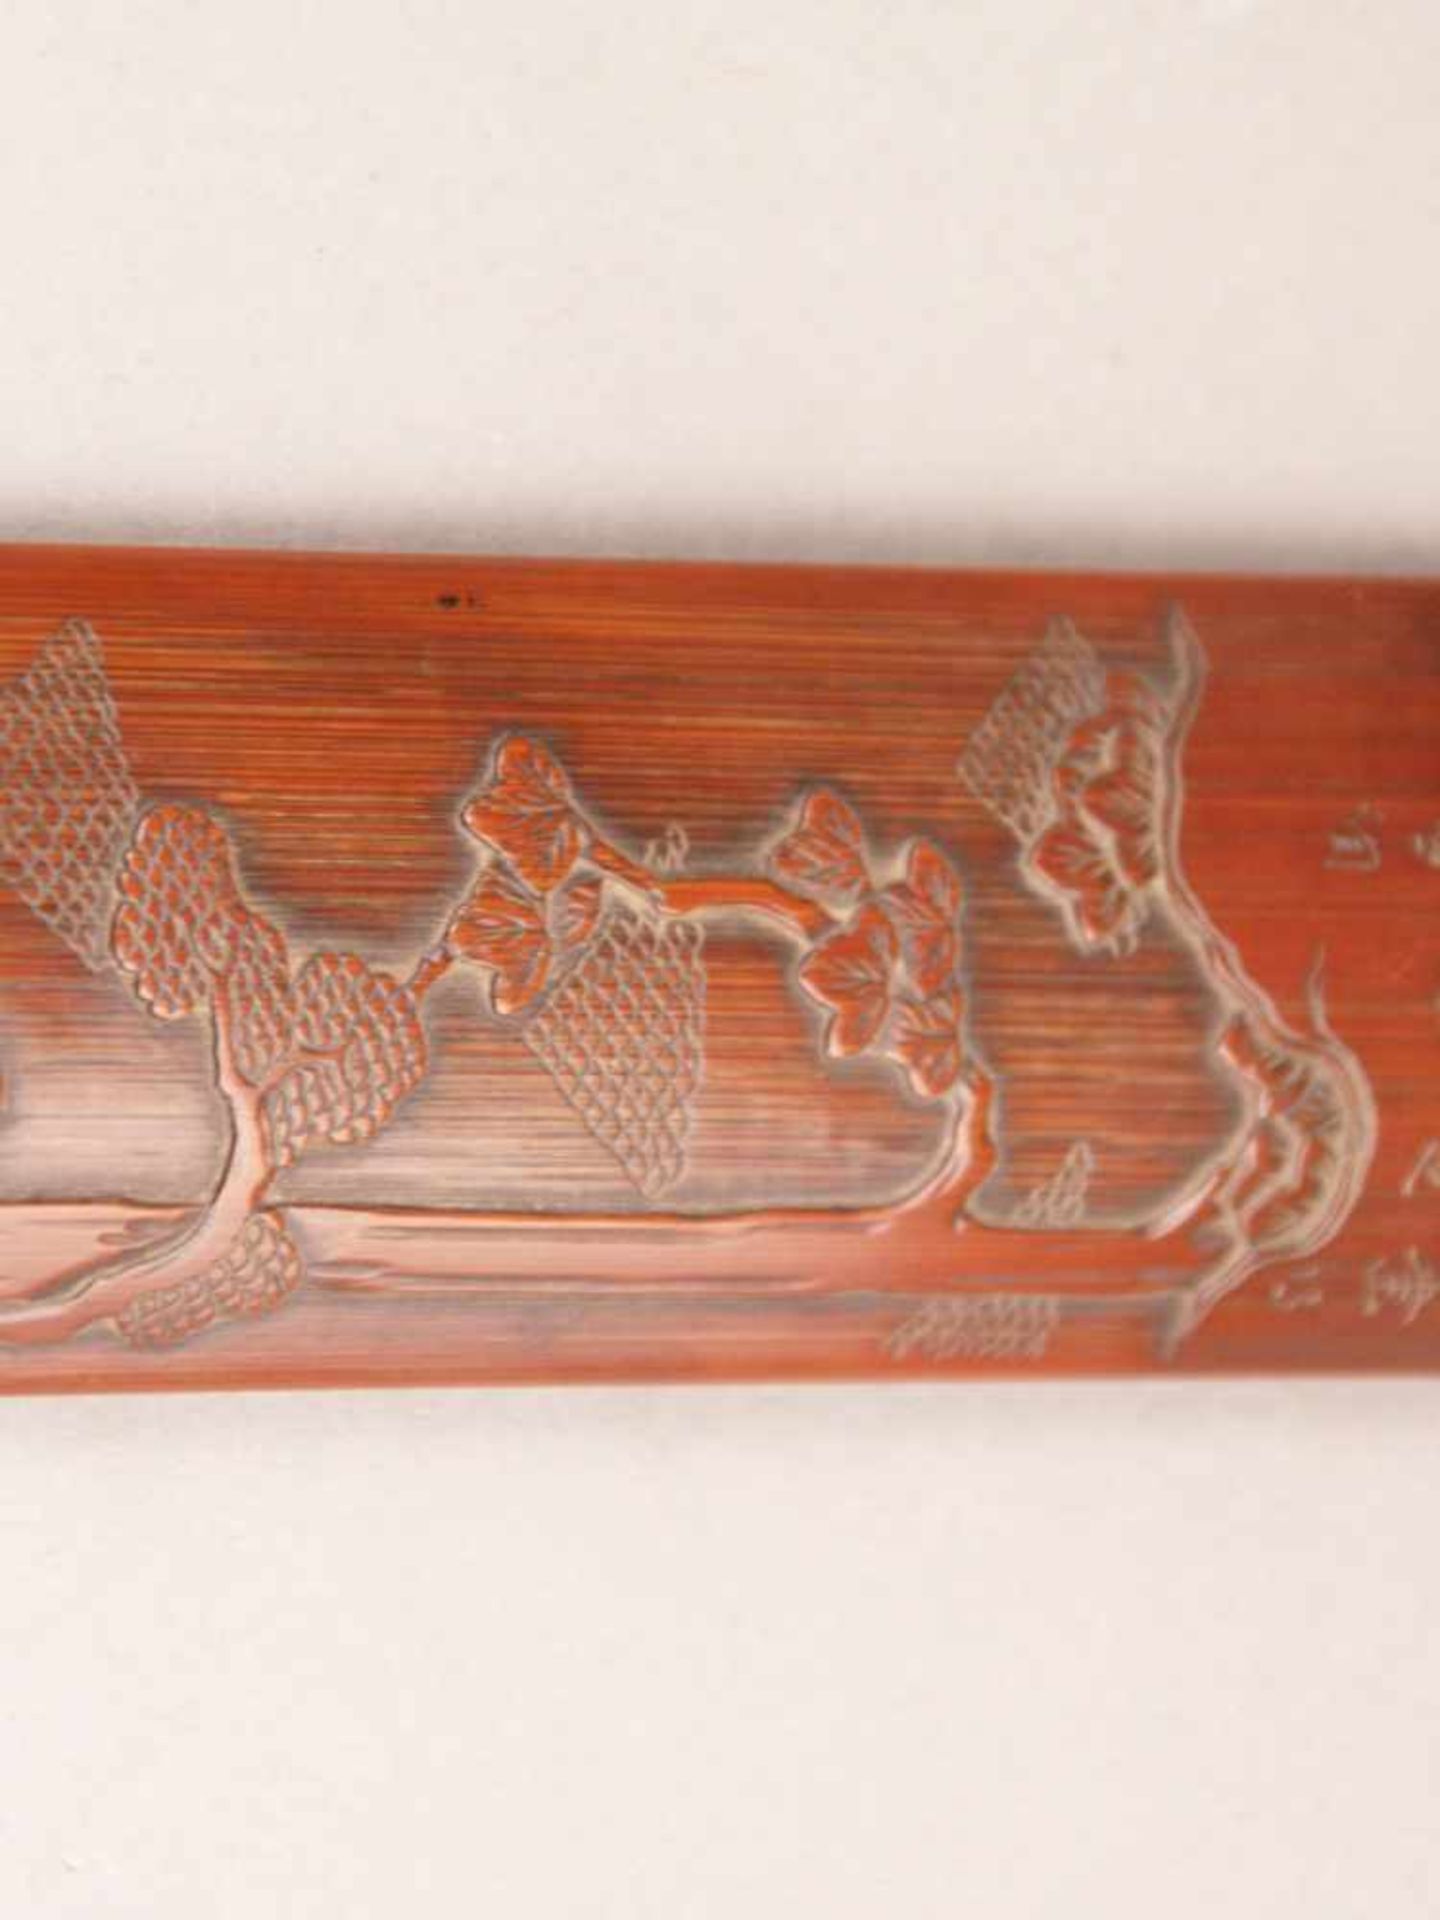 Zwei Handstützen - China, Qing-Dynastie, 18./19.Jh., konvexe längliche Form, Bambusholz fein - Bild 5 aus 8